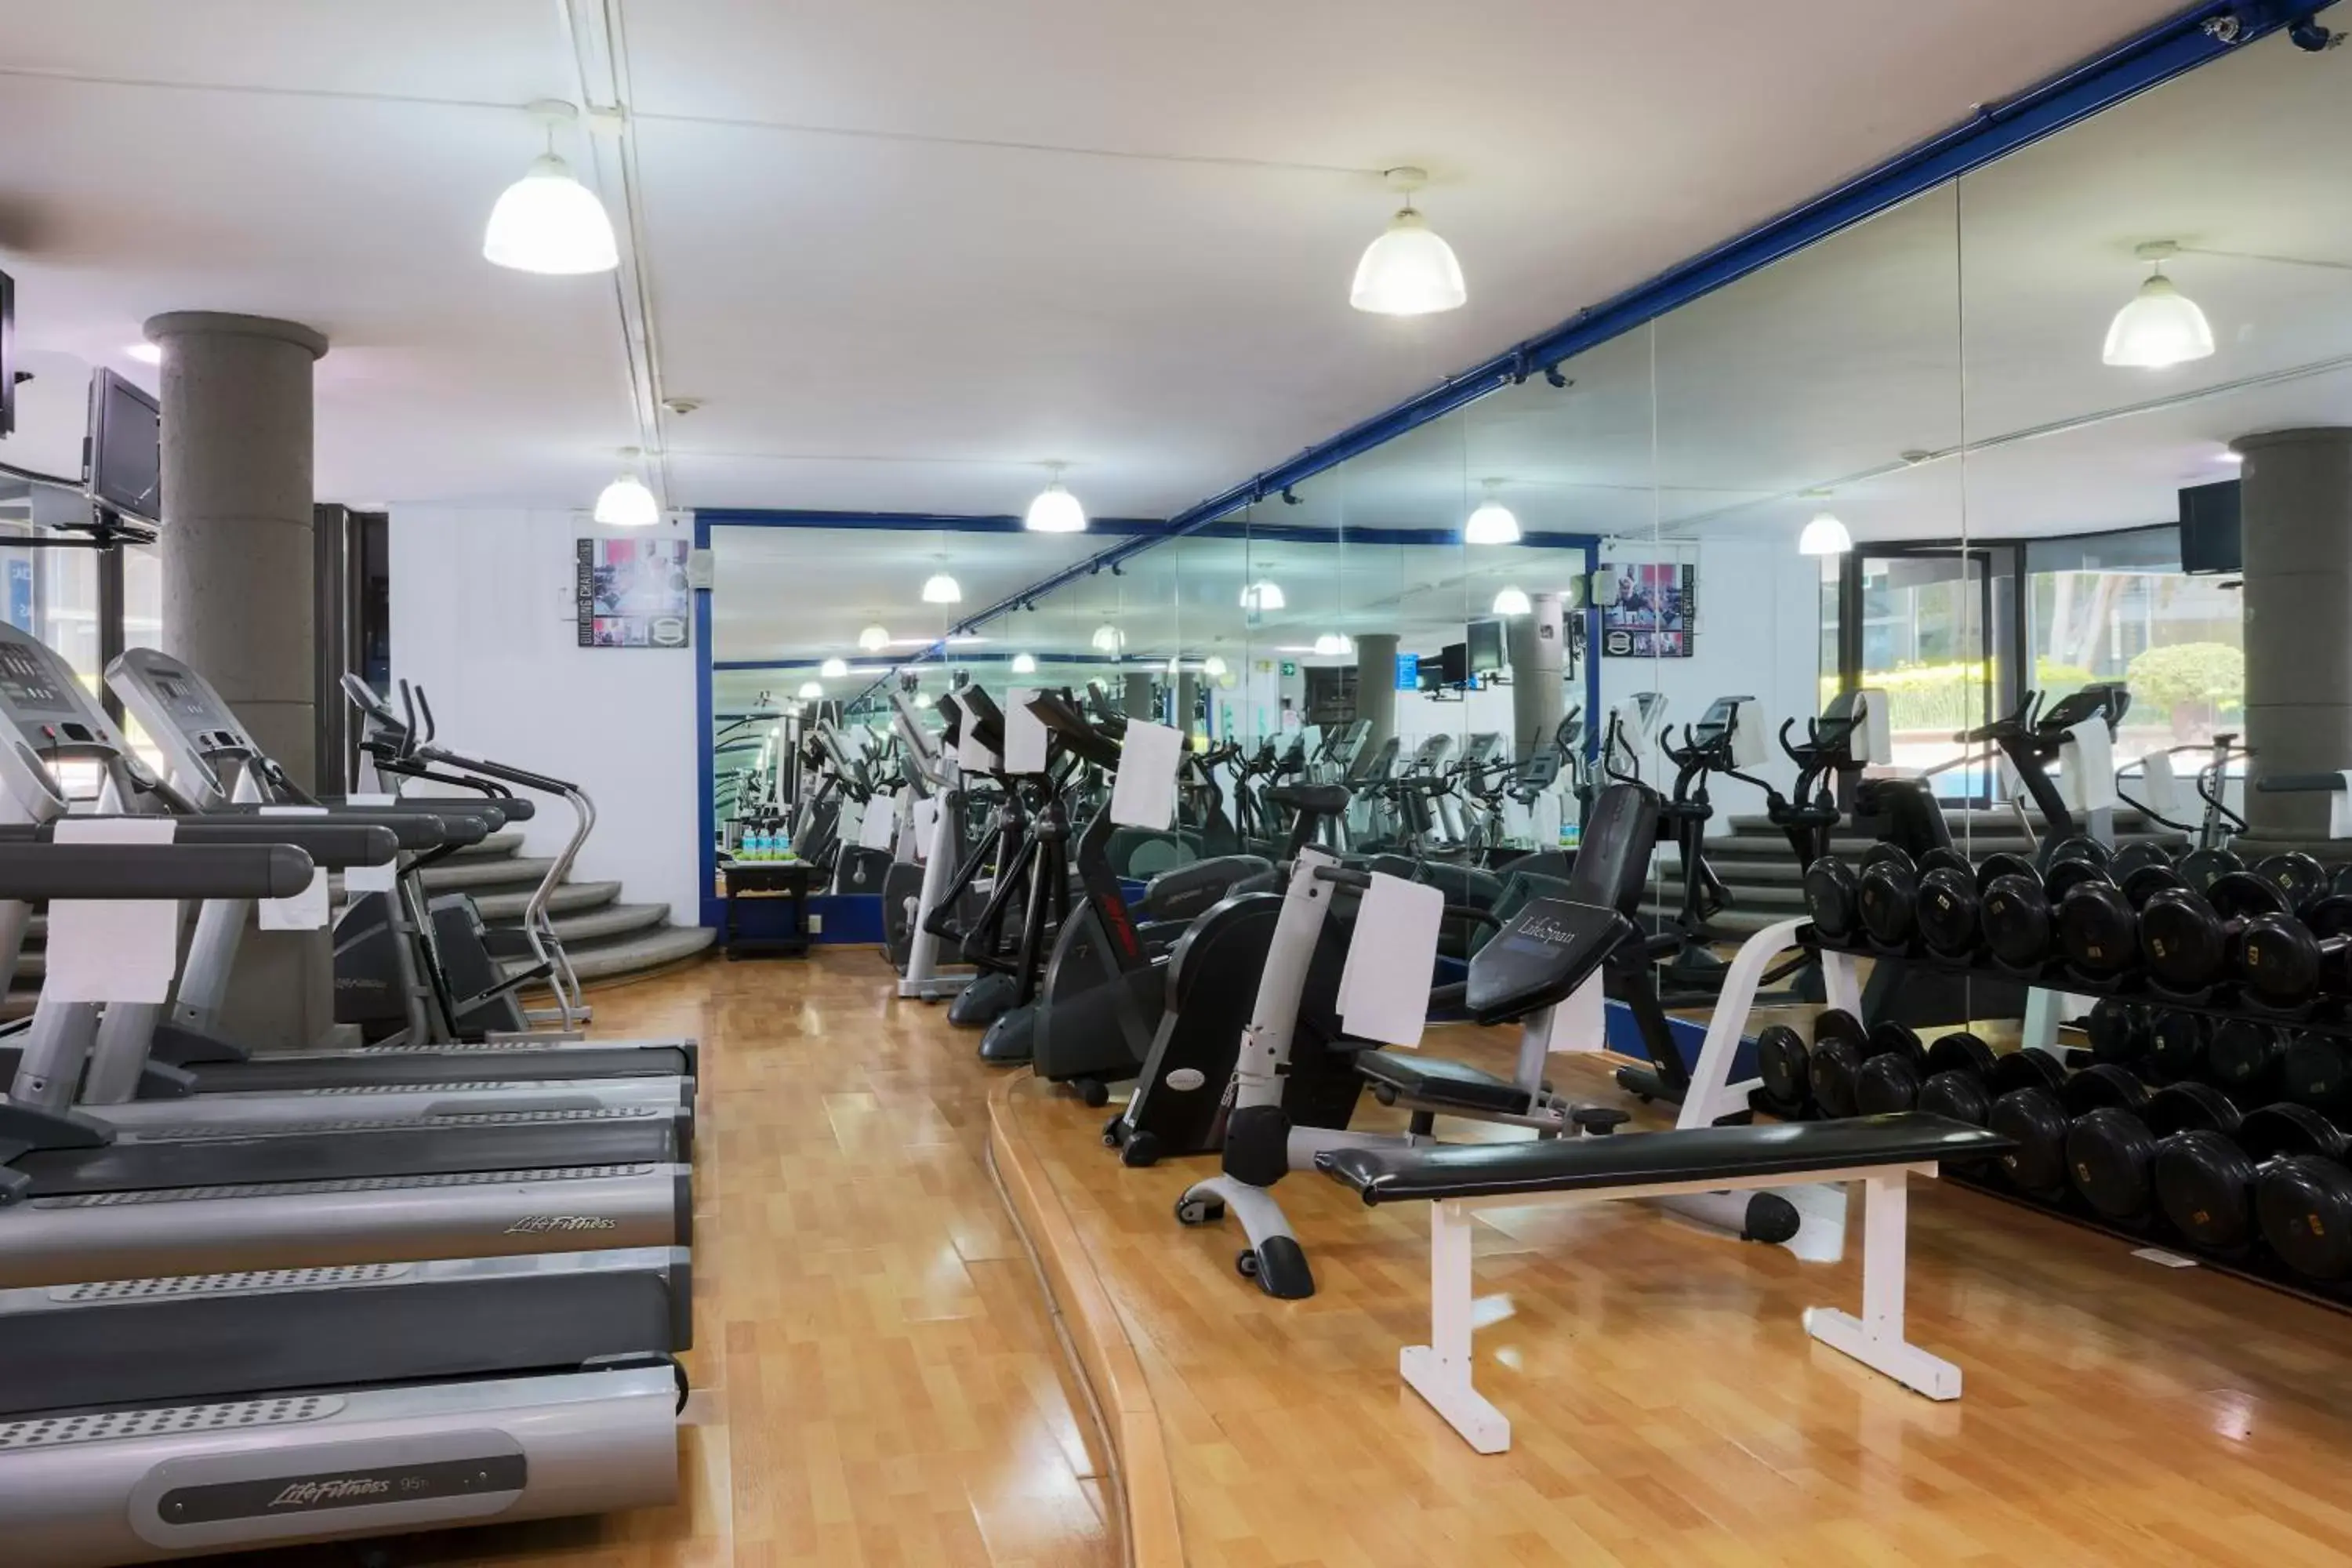 Fitness centre/facilities, Fitness Center/Facilities in Krystal Satelite Maria Barbara